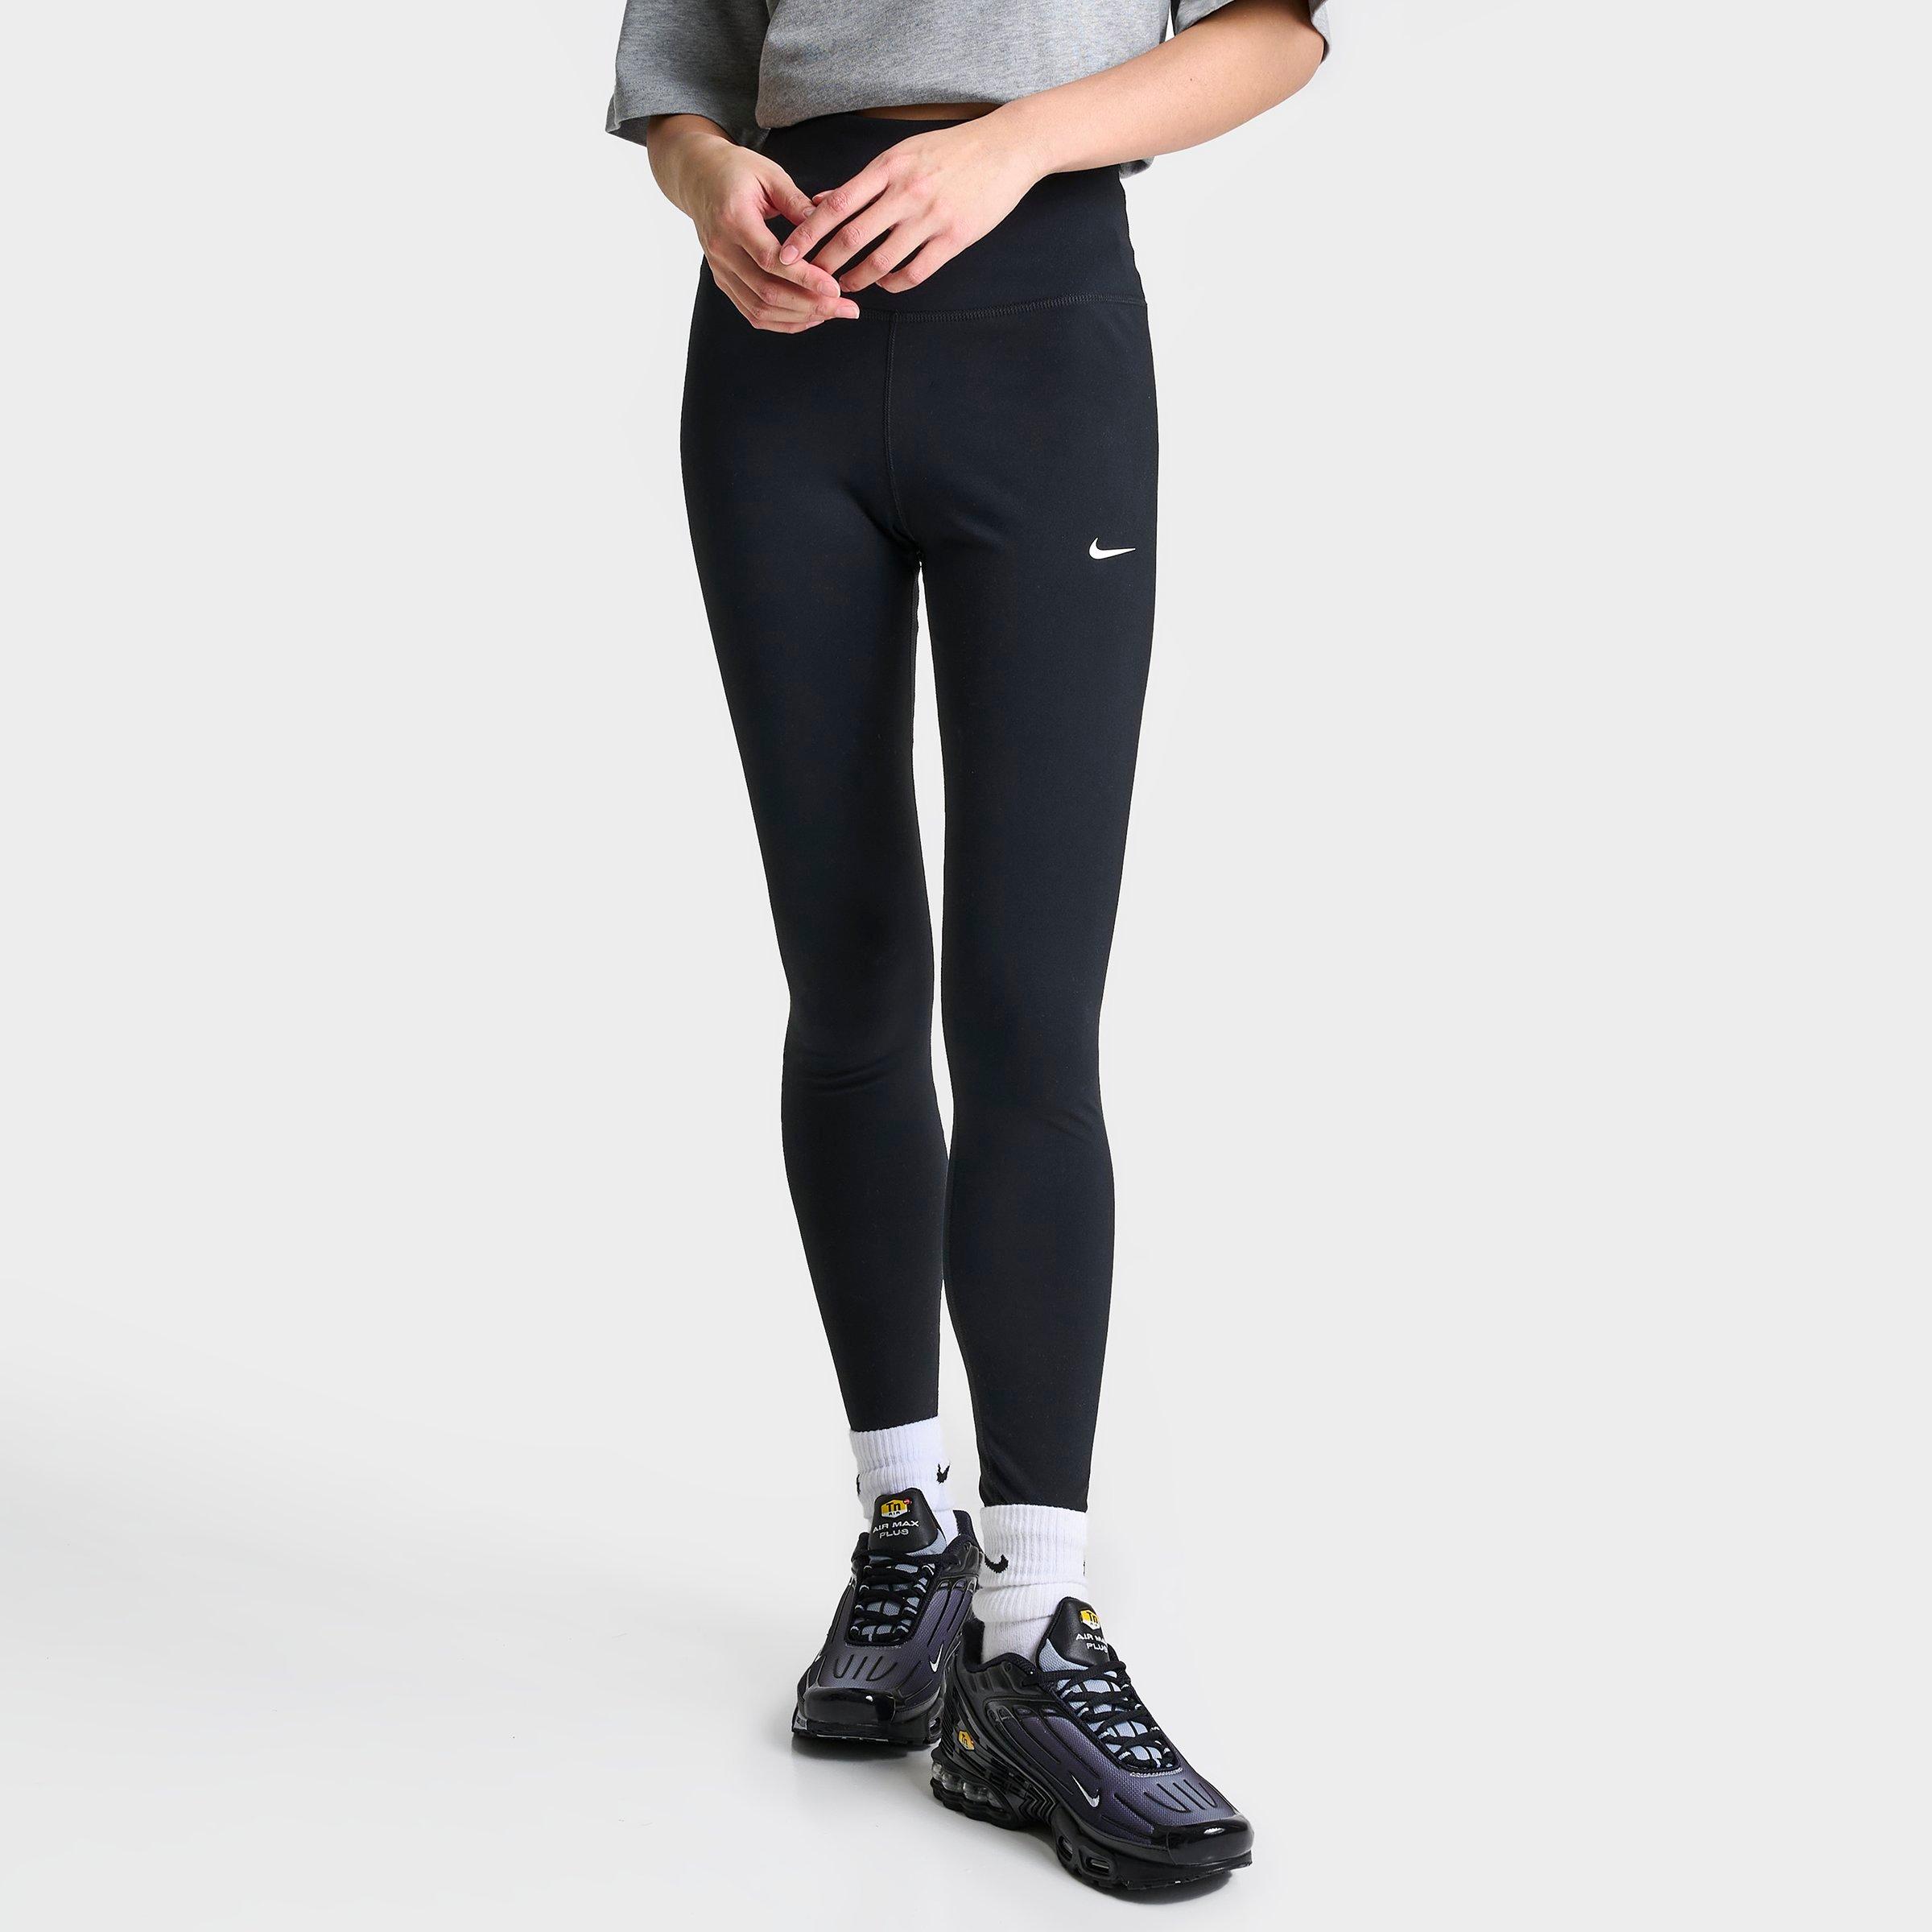 Sportswear Big Kids (XS - XL) Grey Tights & Leggings.